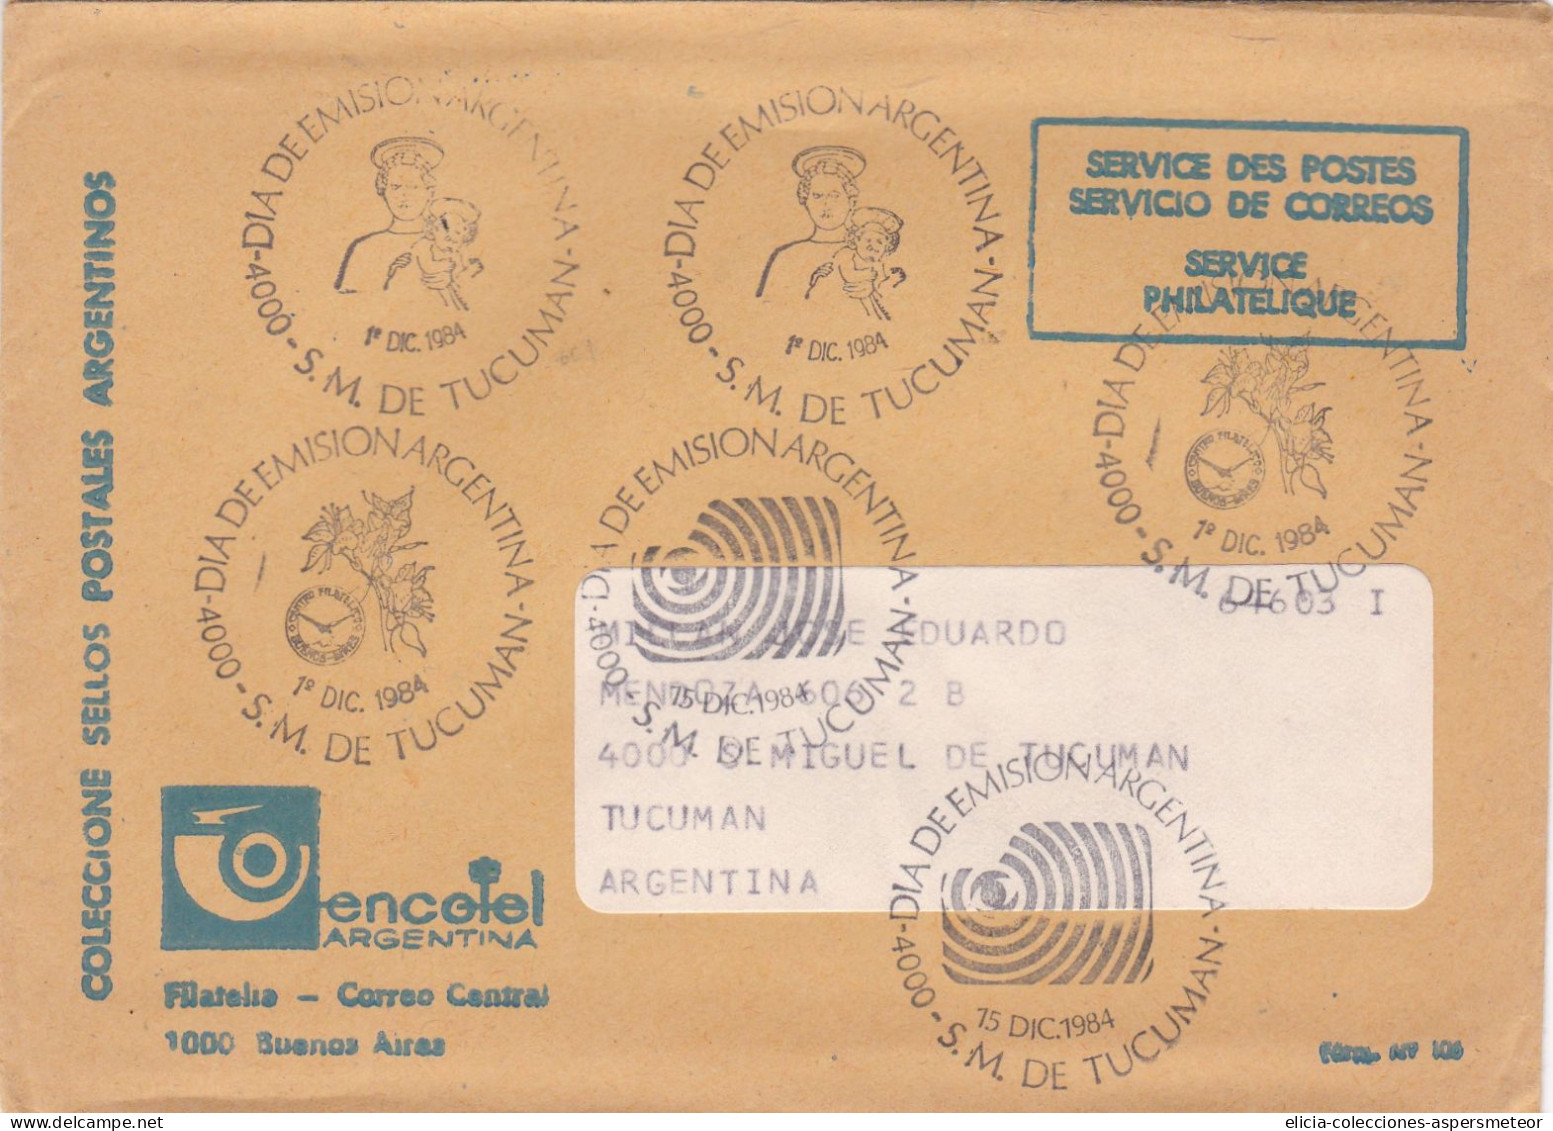 Argentina - 1984 - Booklet - Collection Of Argentine Postage Stamps ENCOTEL - Philatelique Service - Caja 30 - Libretti